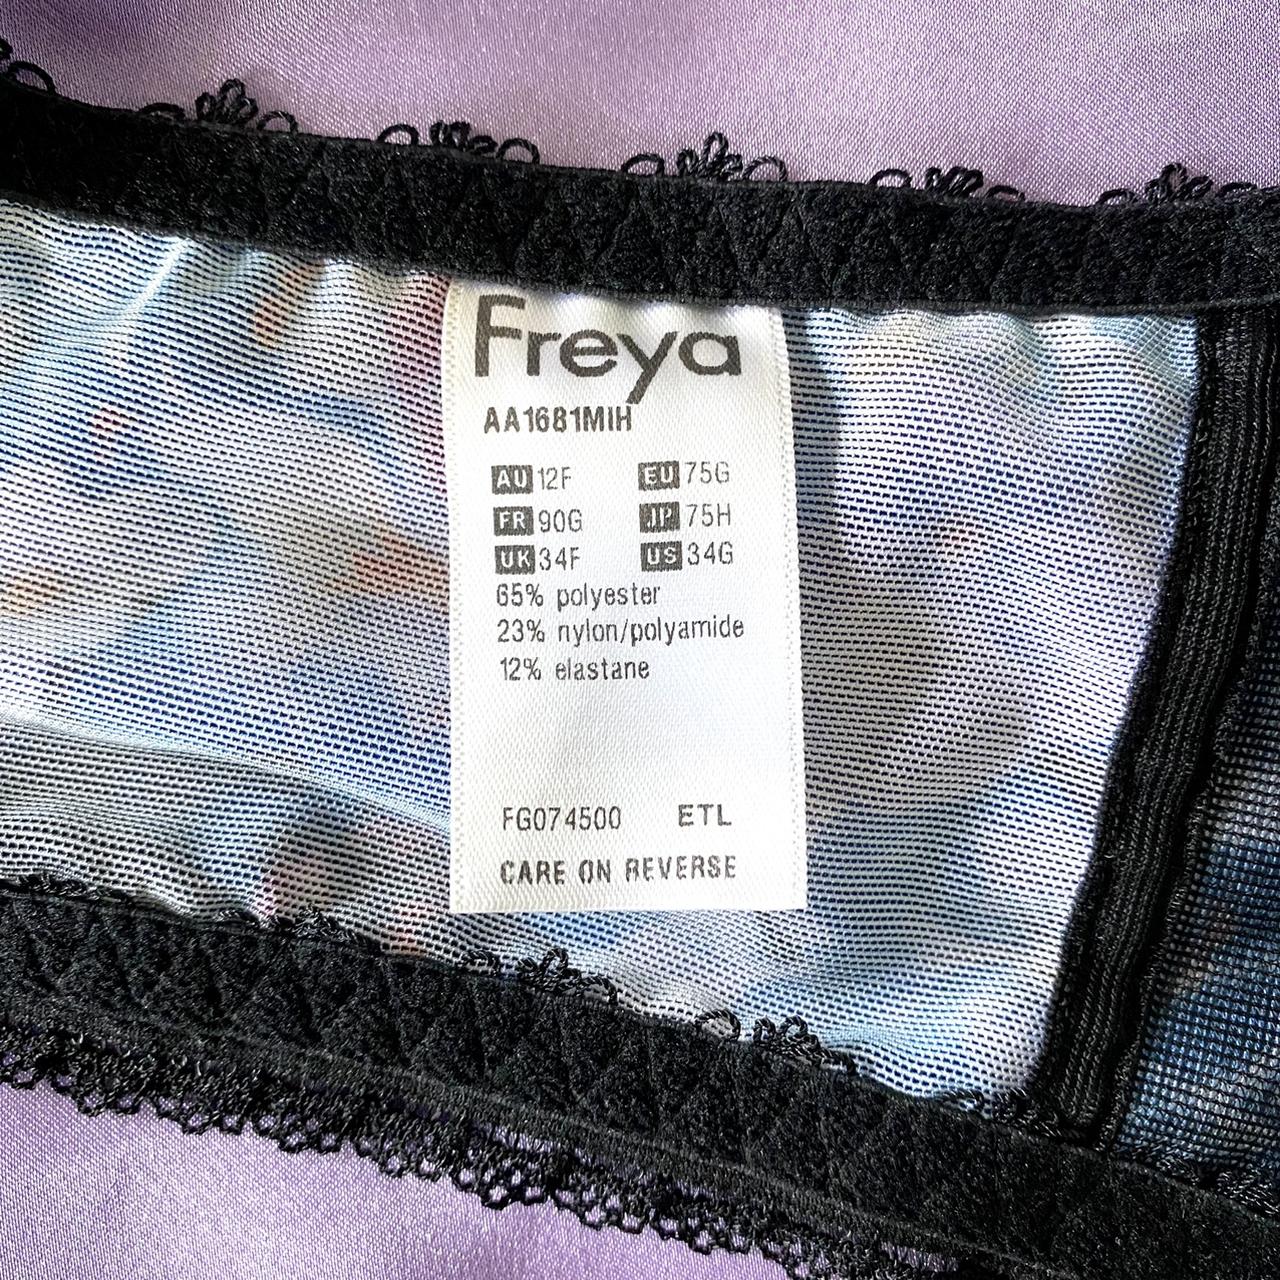 Product Image 4 - 🌸 Freya bra size (34G)